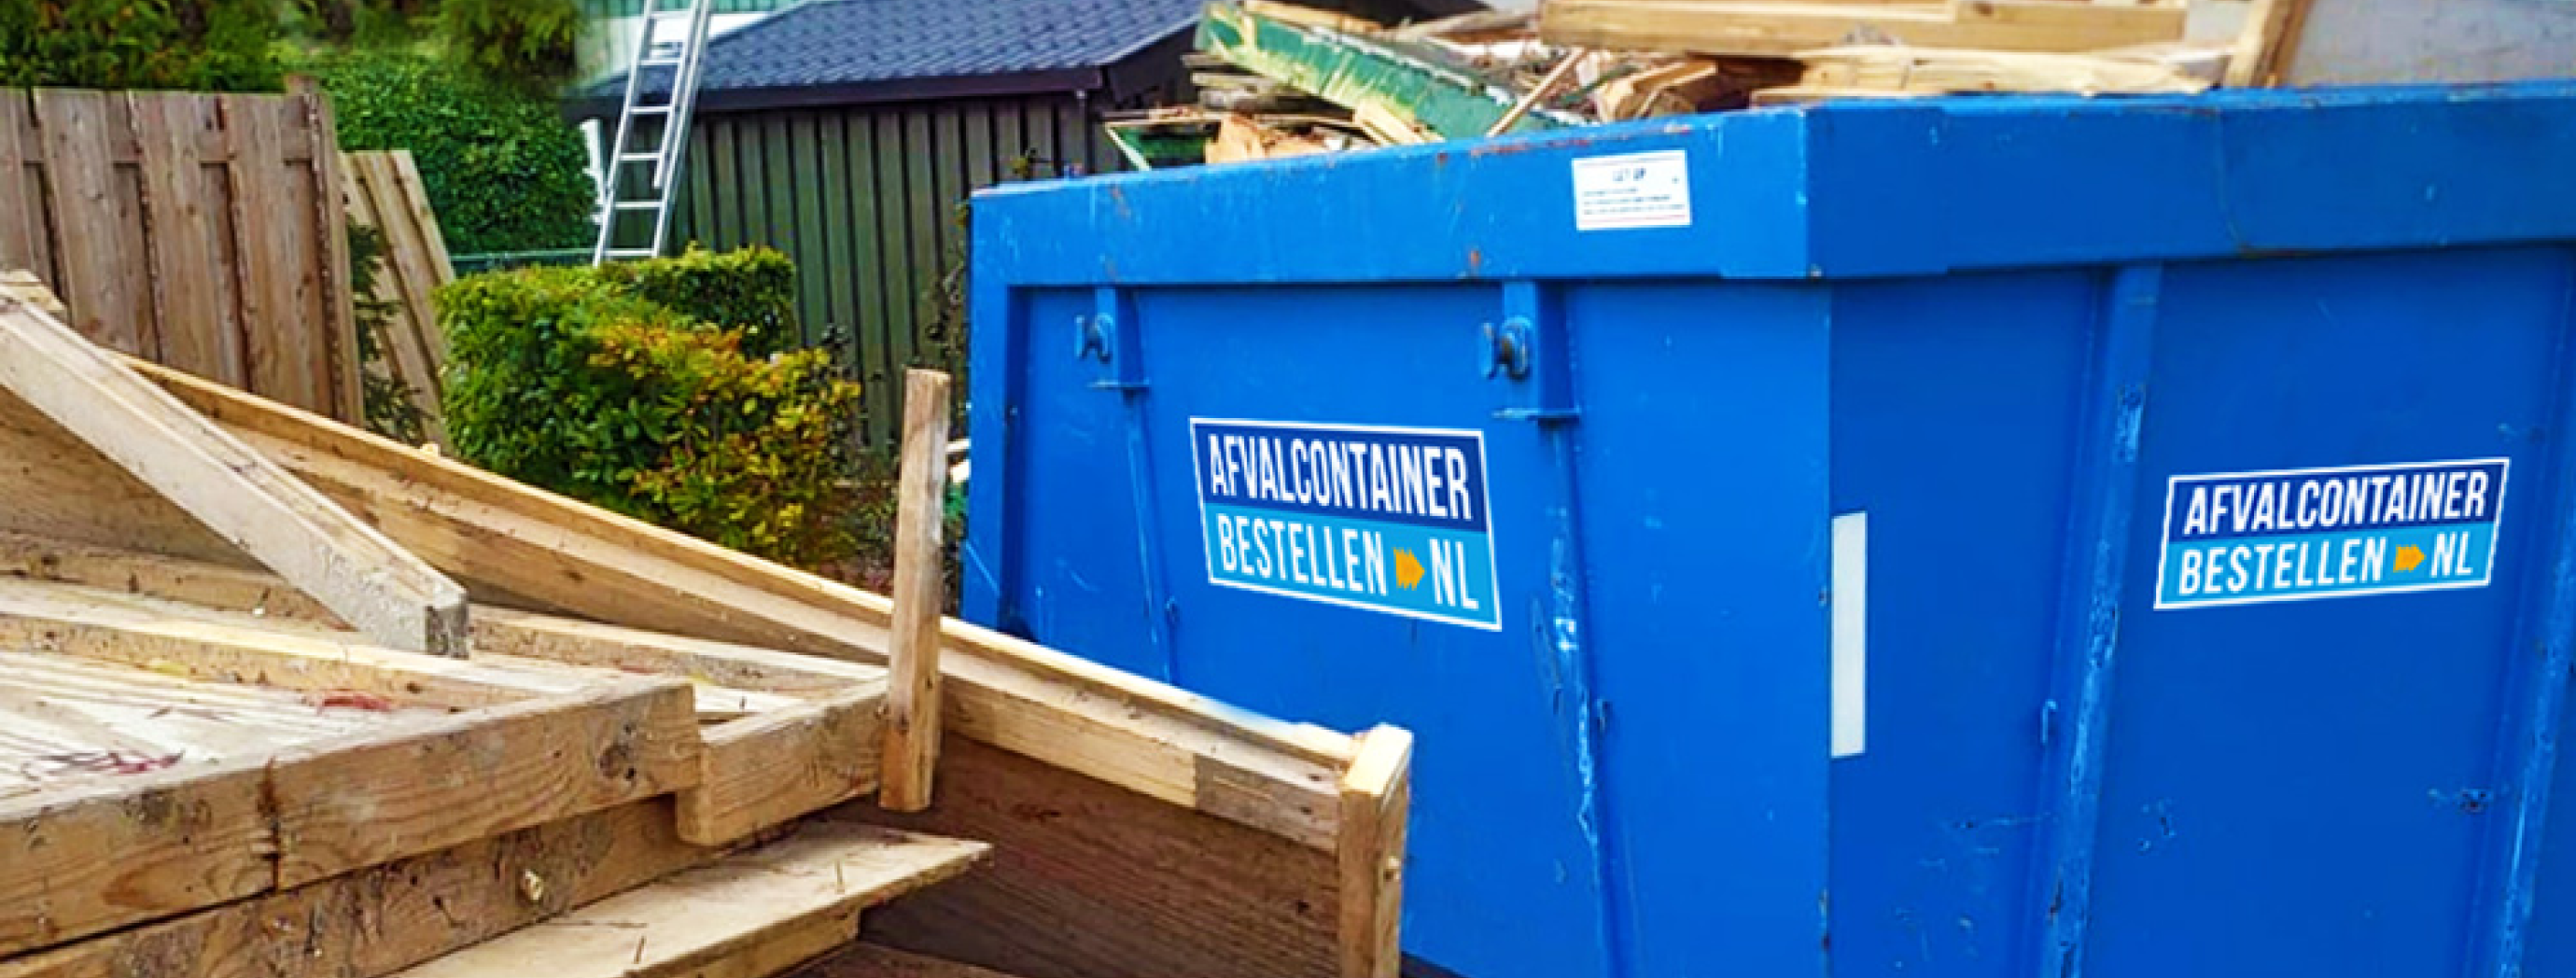 Hout afvoeren banner | Afvalcontainer bestellen